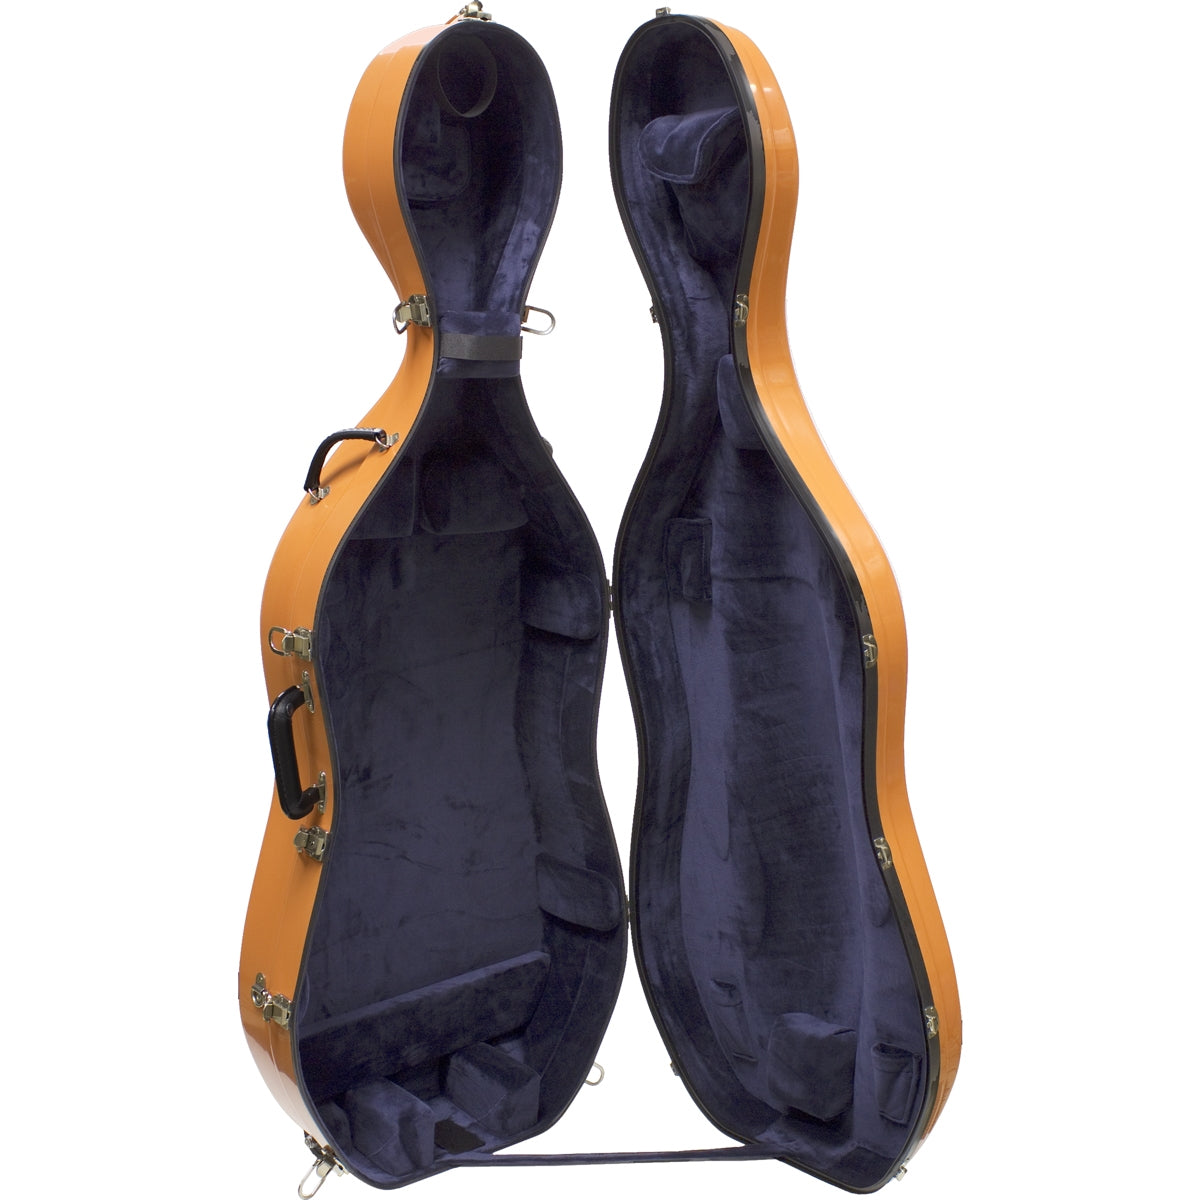 Bobelock 2000LS Fiberglass Cello Case with Wheels - 4/4 Size